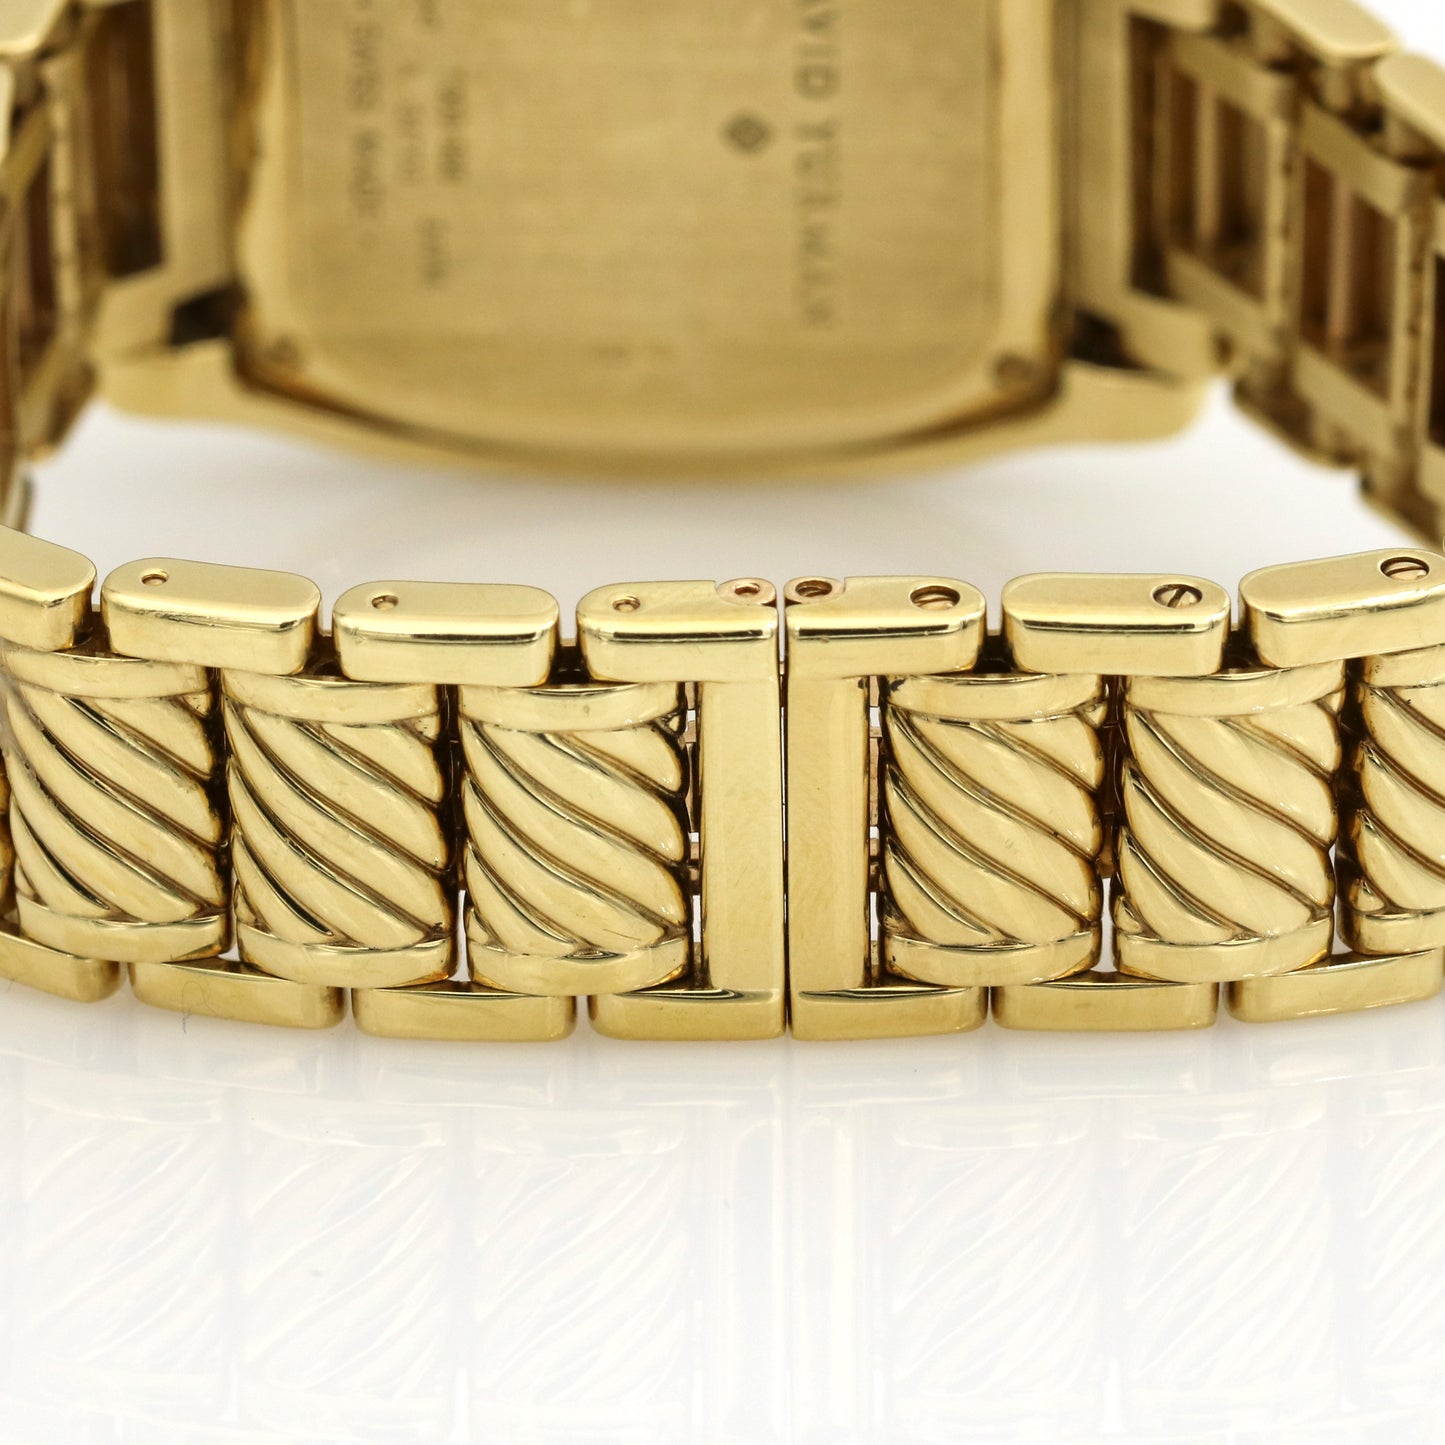 Women's David Yurman Thoroughbred 18k Yellow Gold Watch T303-S88